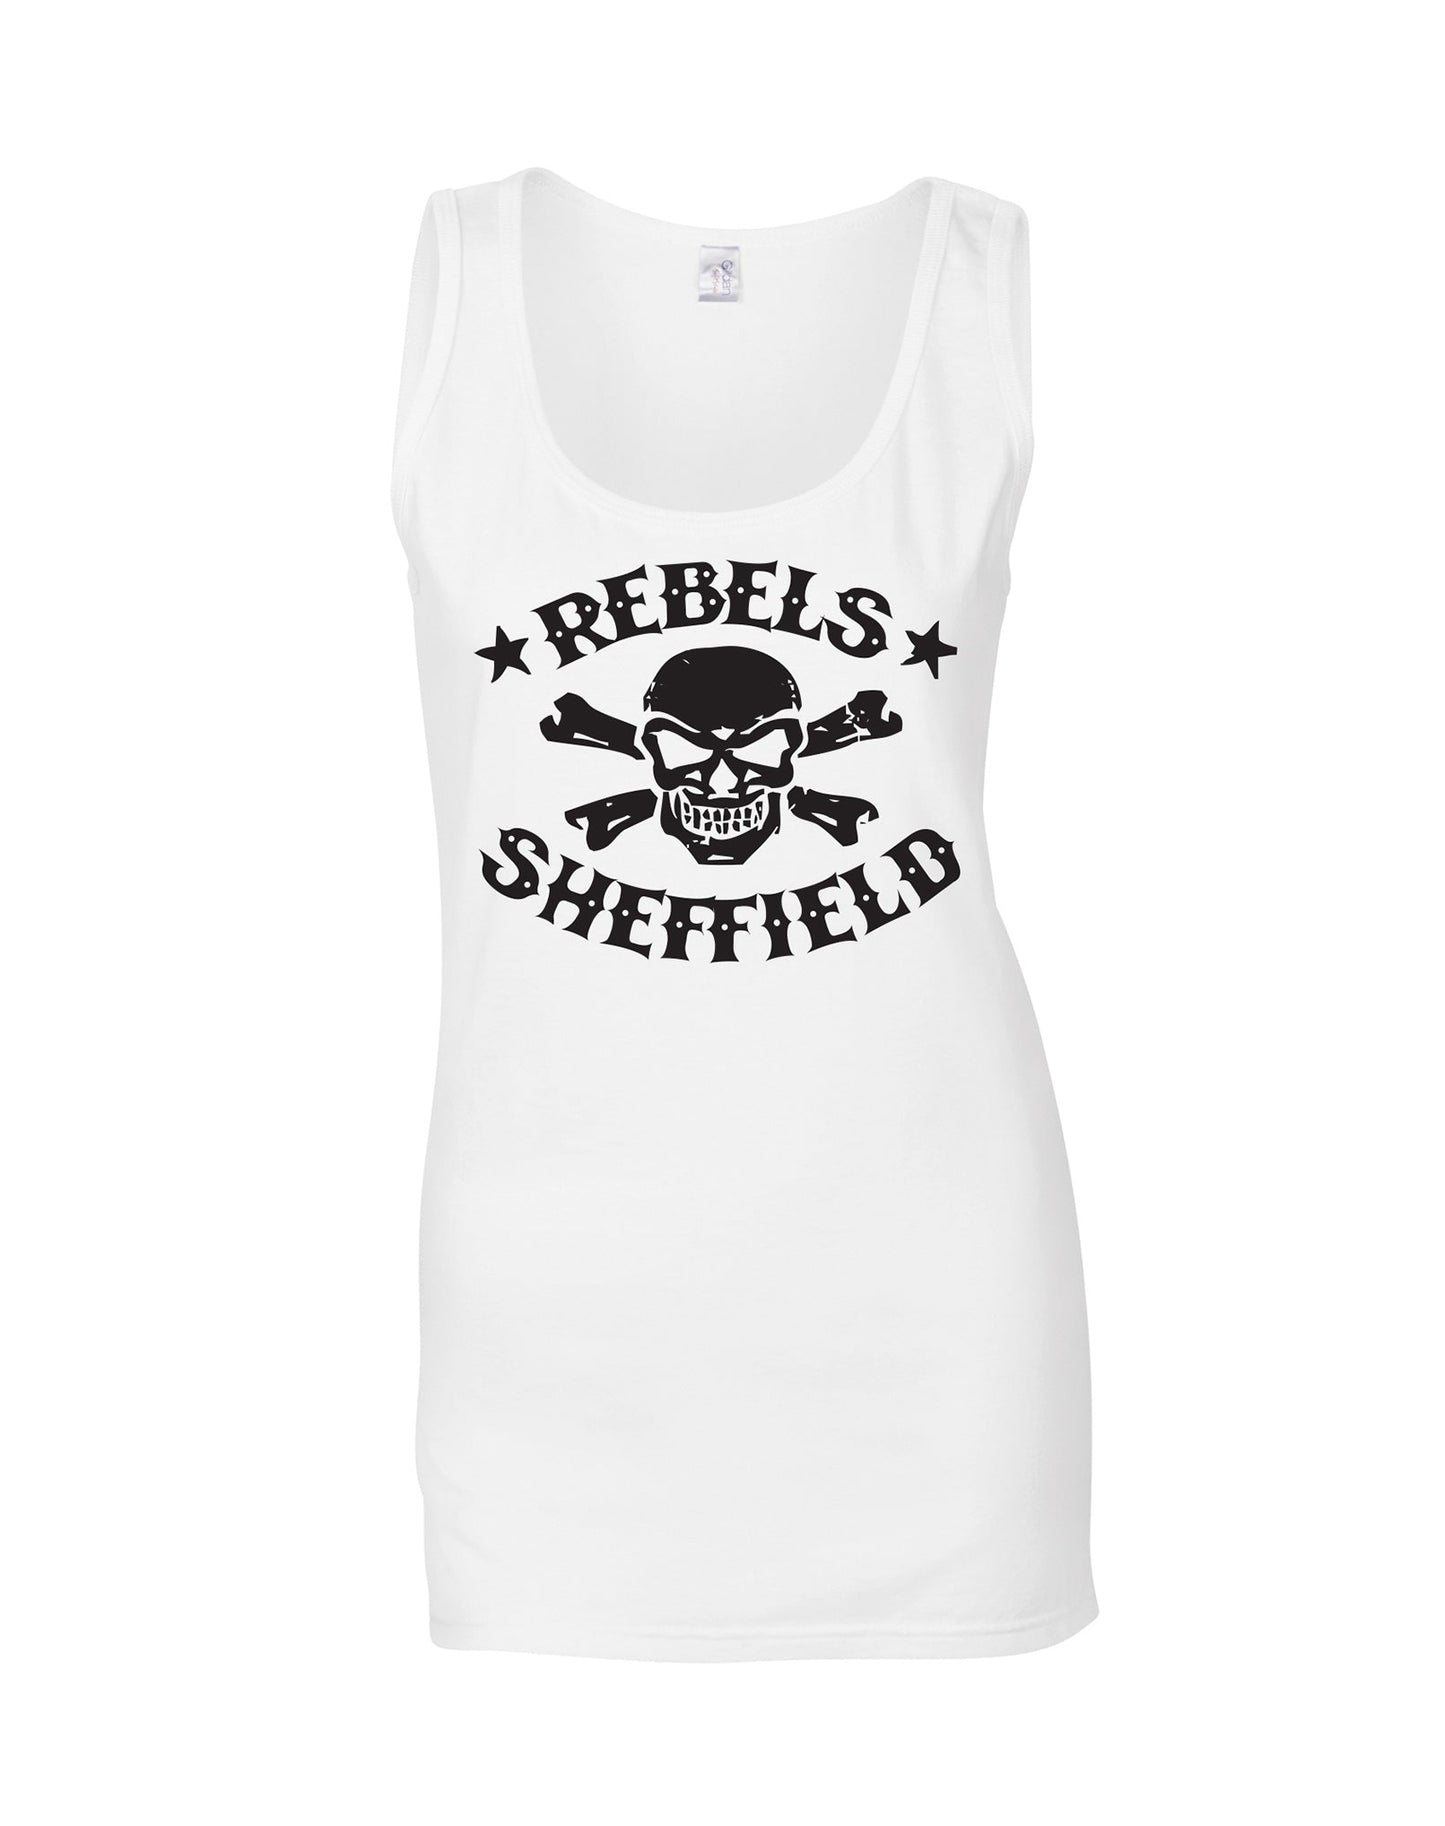 Rebels skull crossbones ladies fit vest - various colours - Dirty Stop Outs